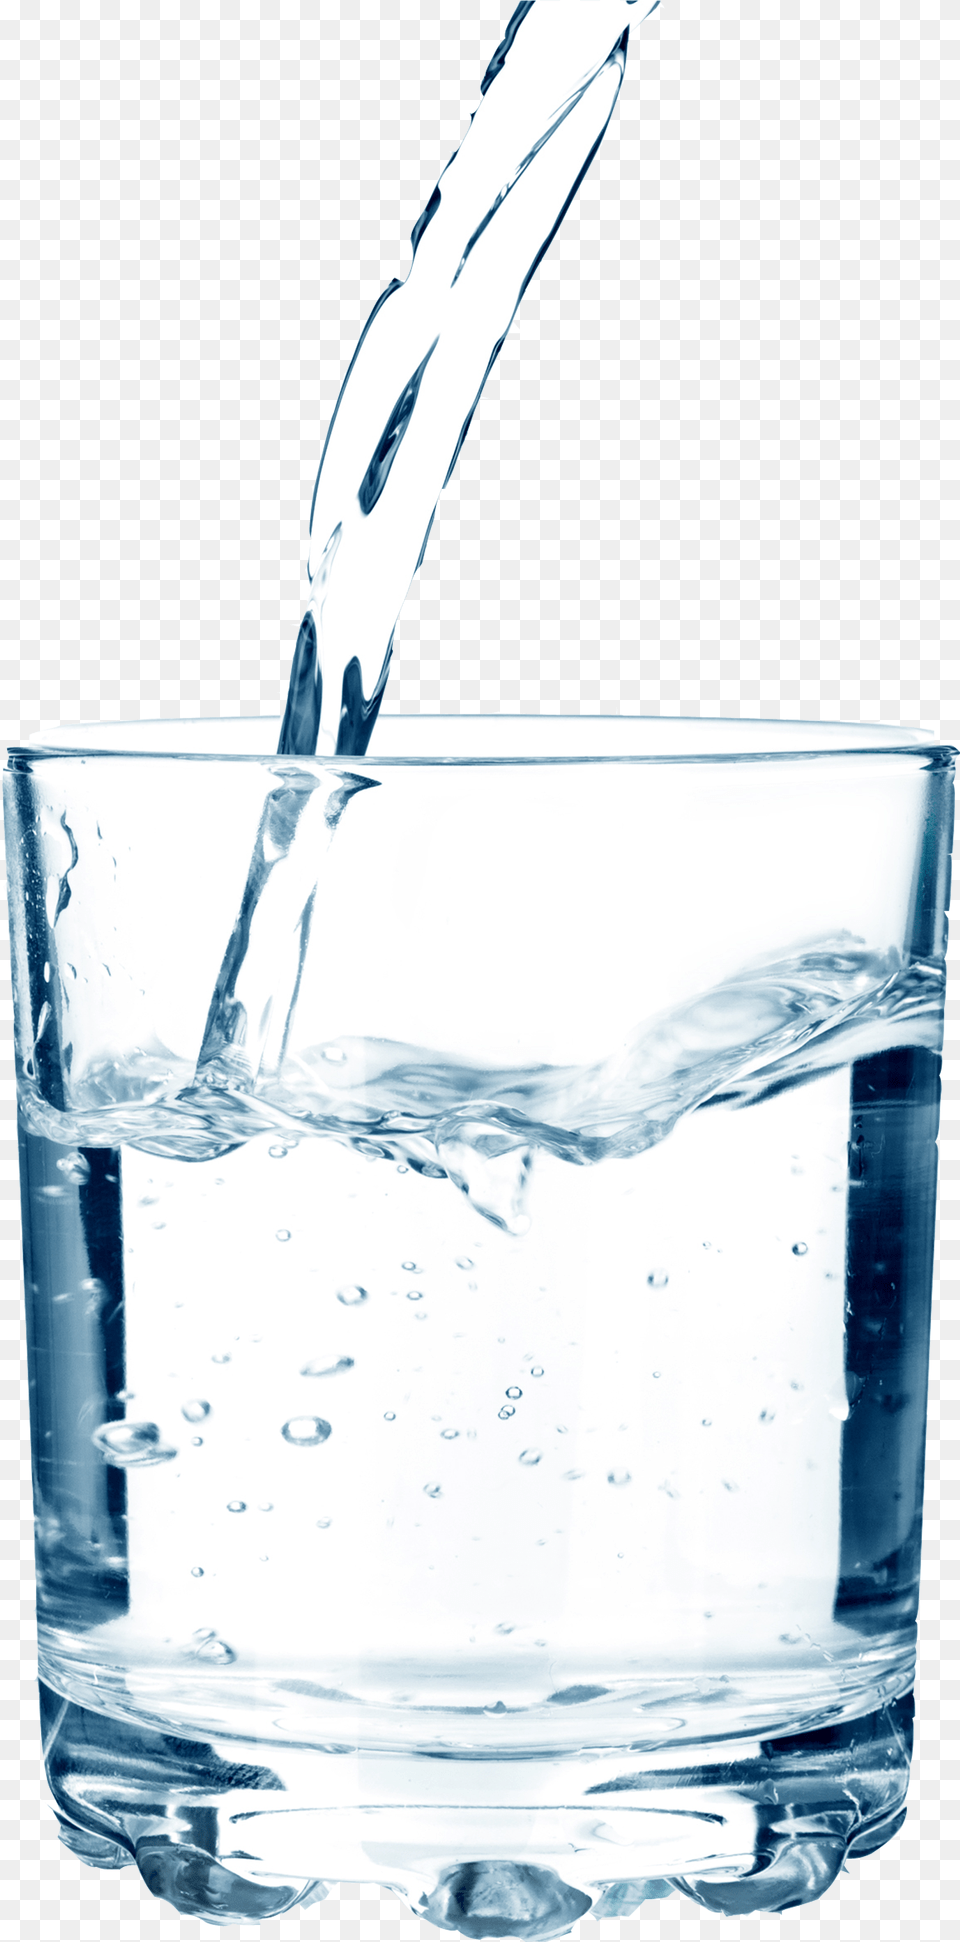 Agua 1 Glass Of Water, Bottle, Water Bottle Png